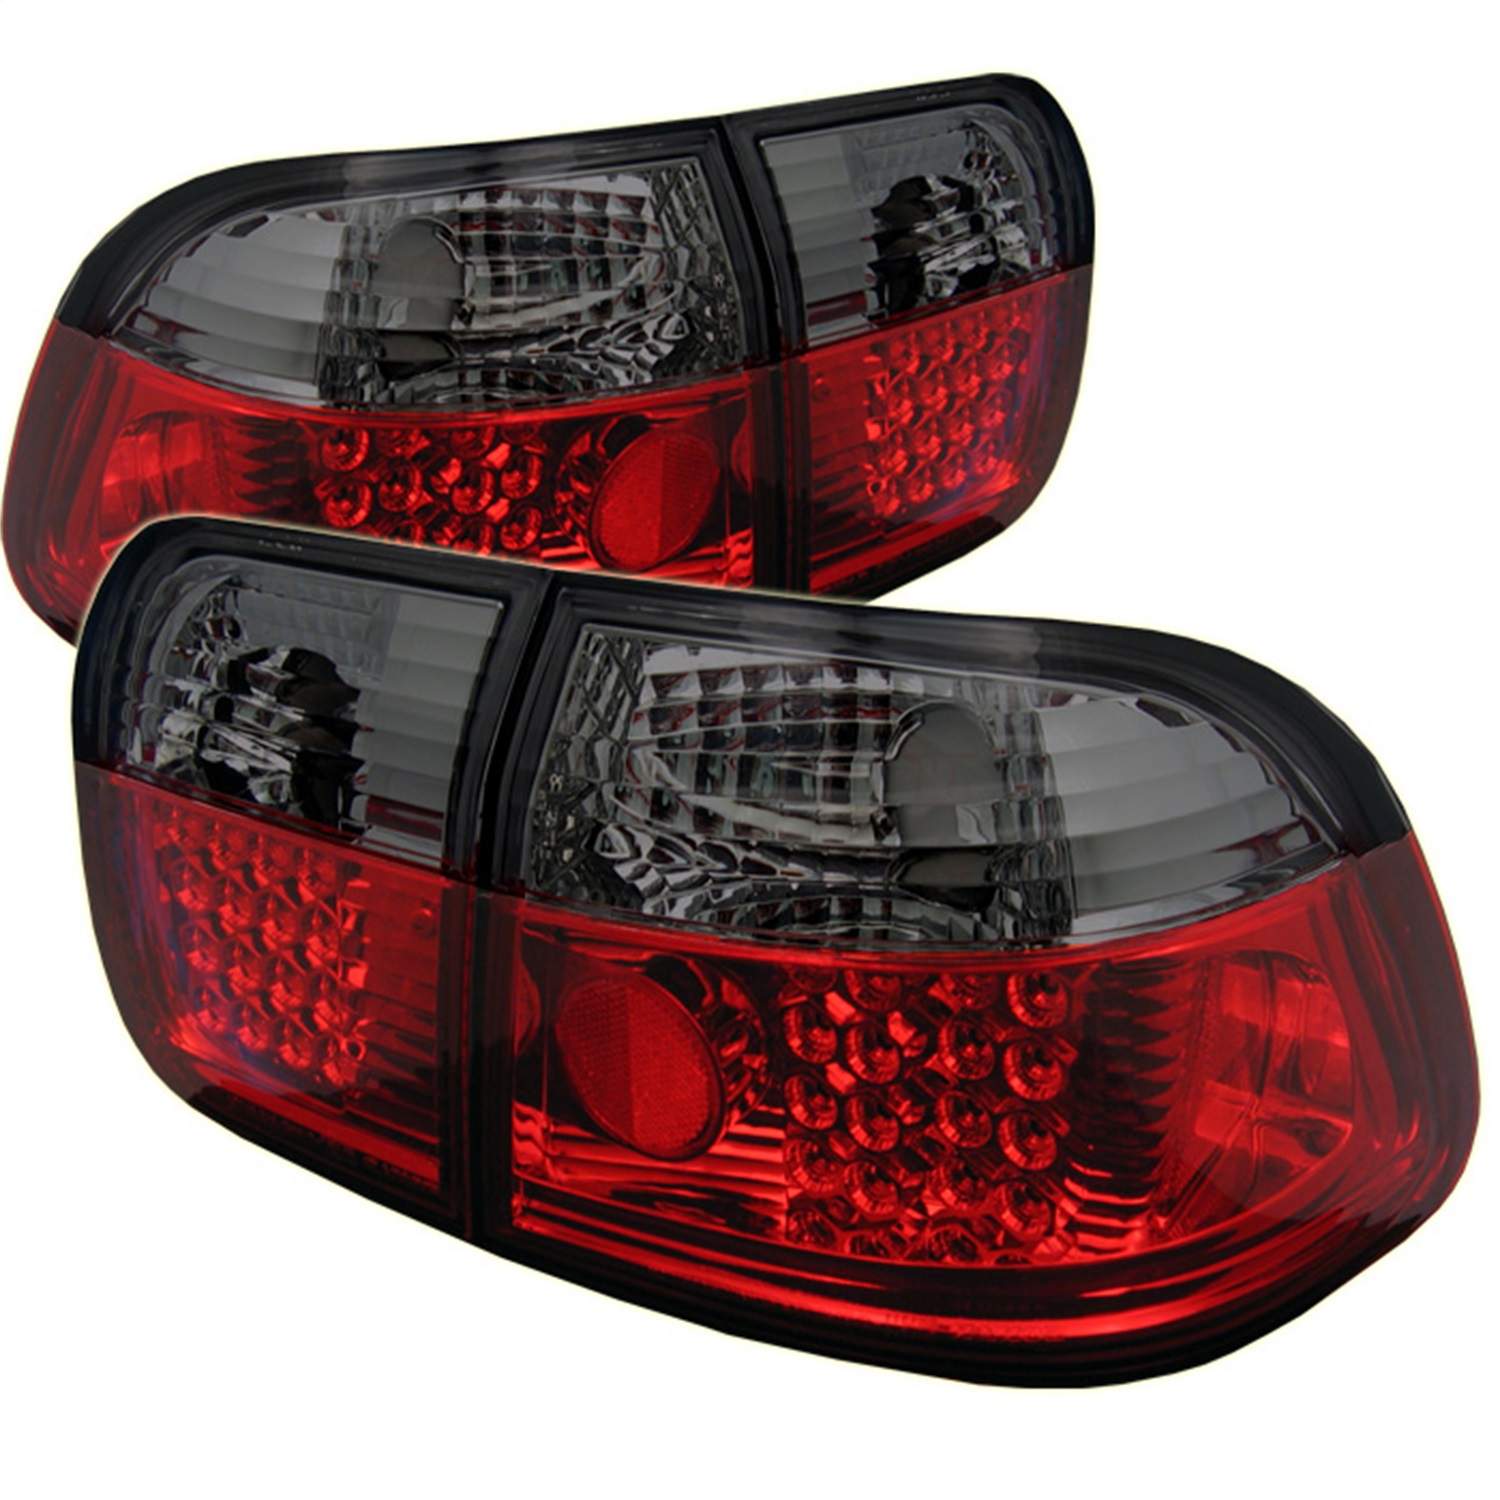 Spyder Auto 5005038 LED Tail Lights Fits 96-98 Civic